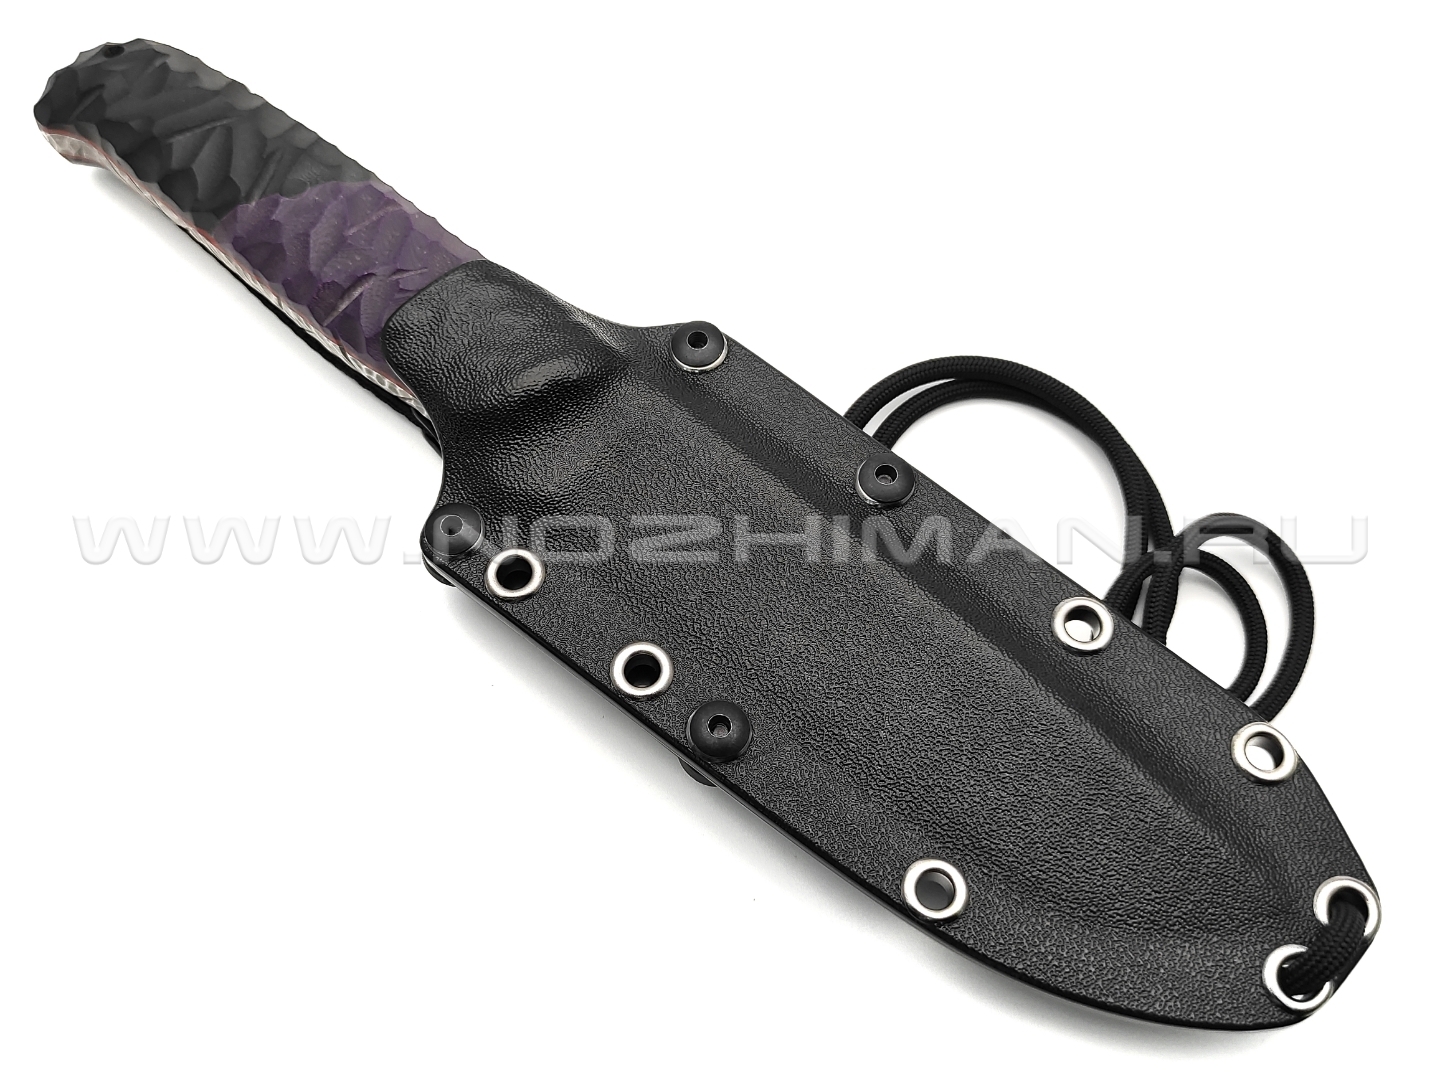 Волчий Век нож Wolfkniven Custom сталь 95Х18 WA Camo, обух 6.2 мм, рукоять G10 black & purple, пины карбон